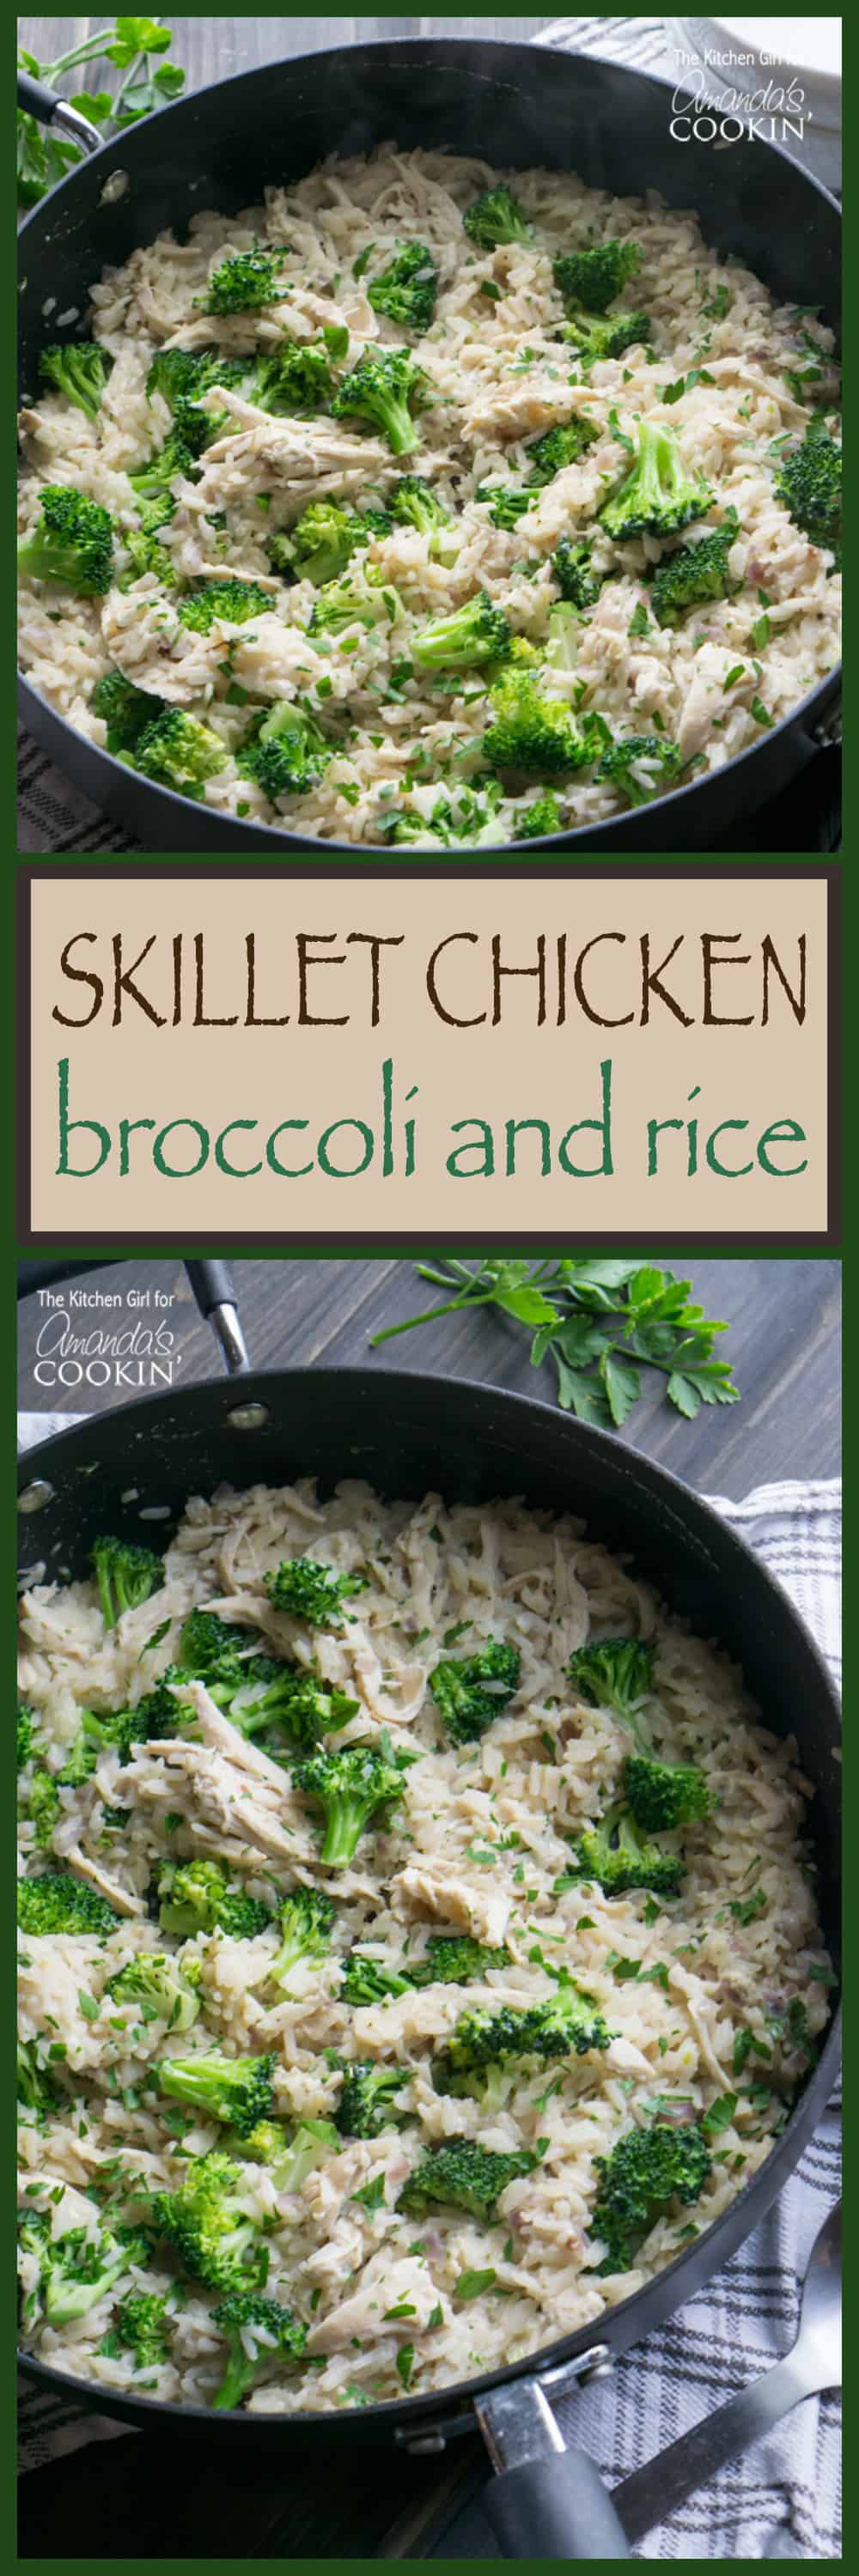 Skillet Chicken, Broccoli & Rice